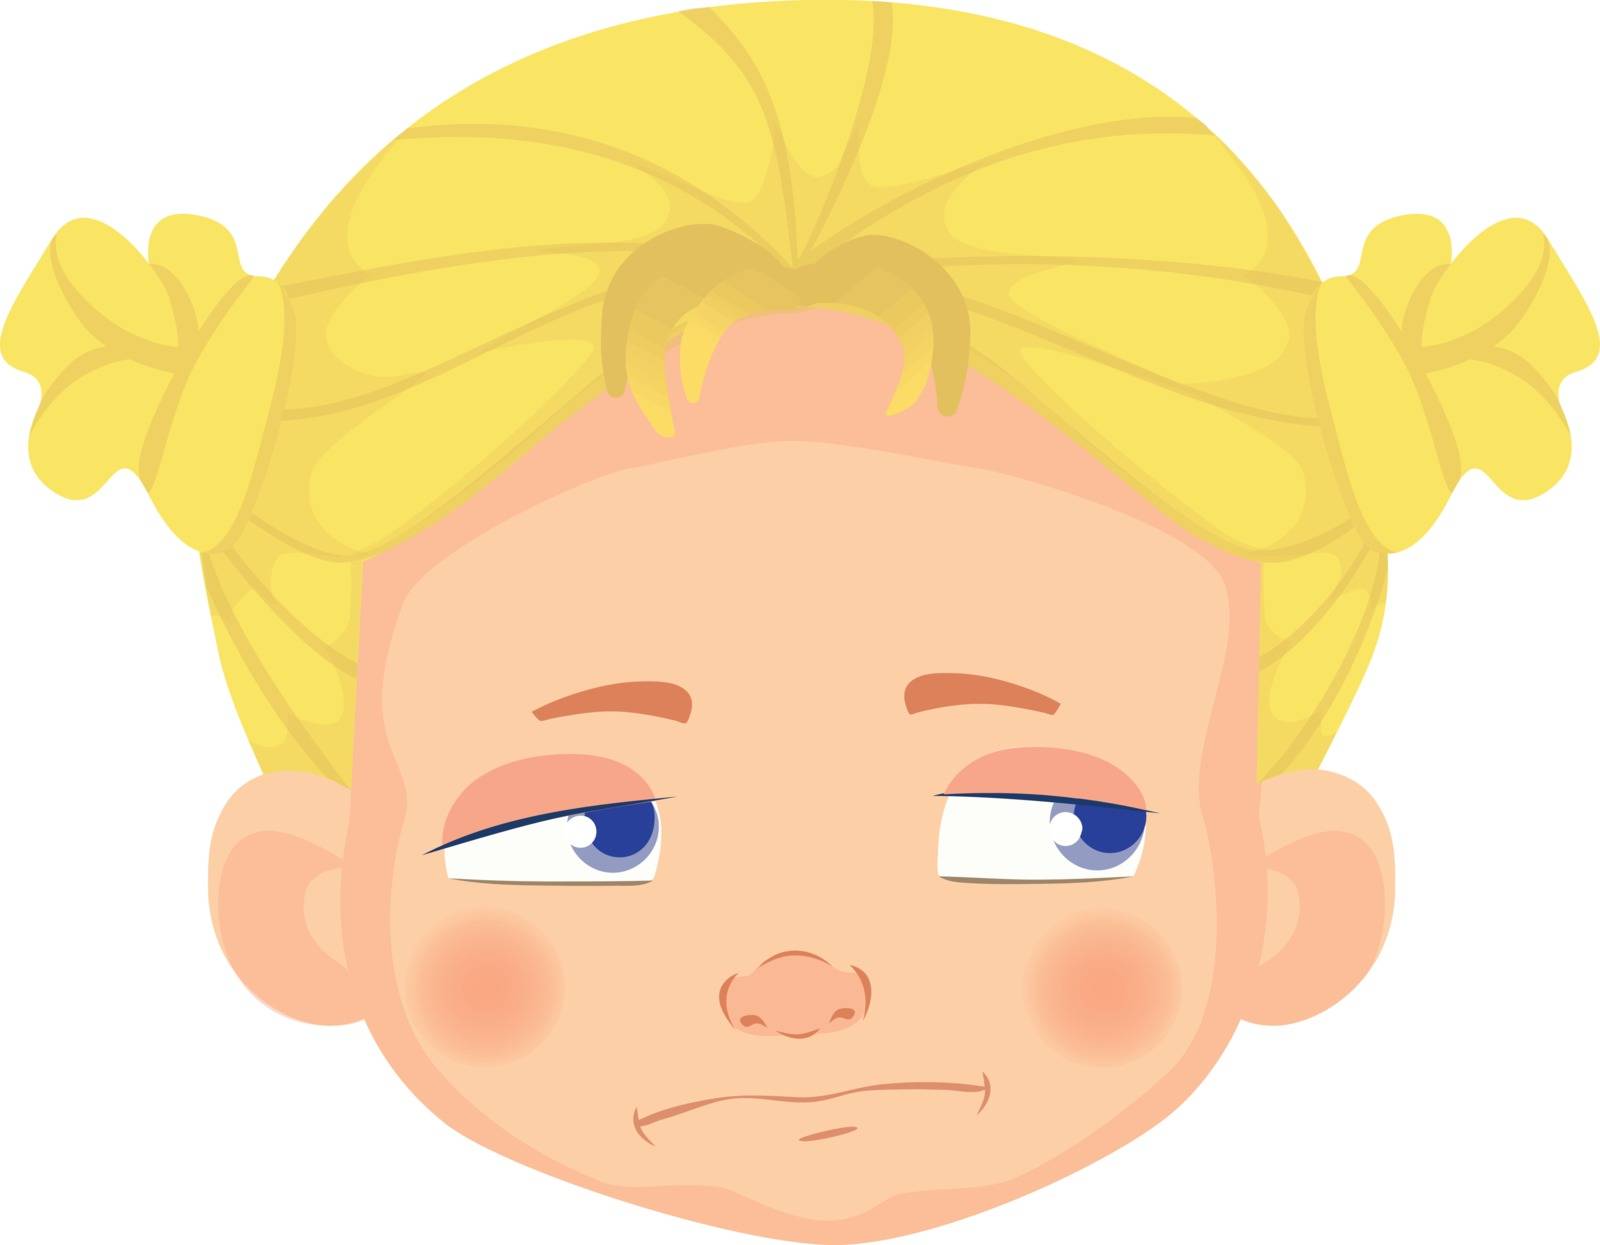 Girl avatar. Facial expression. Caucasian girl vector illustration